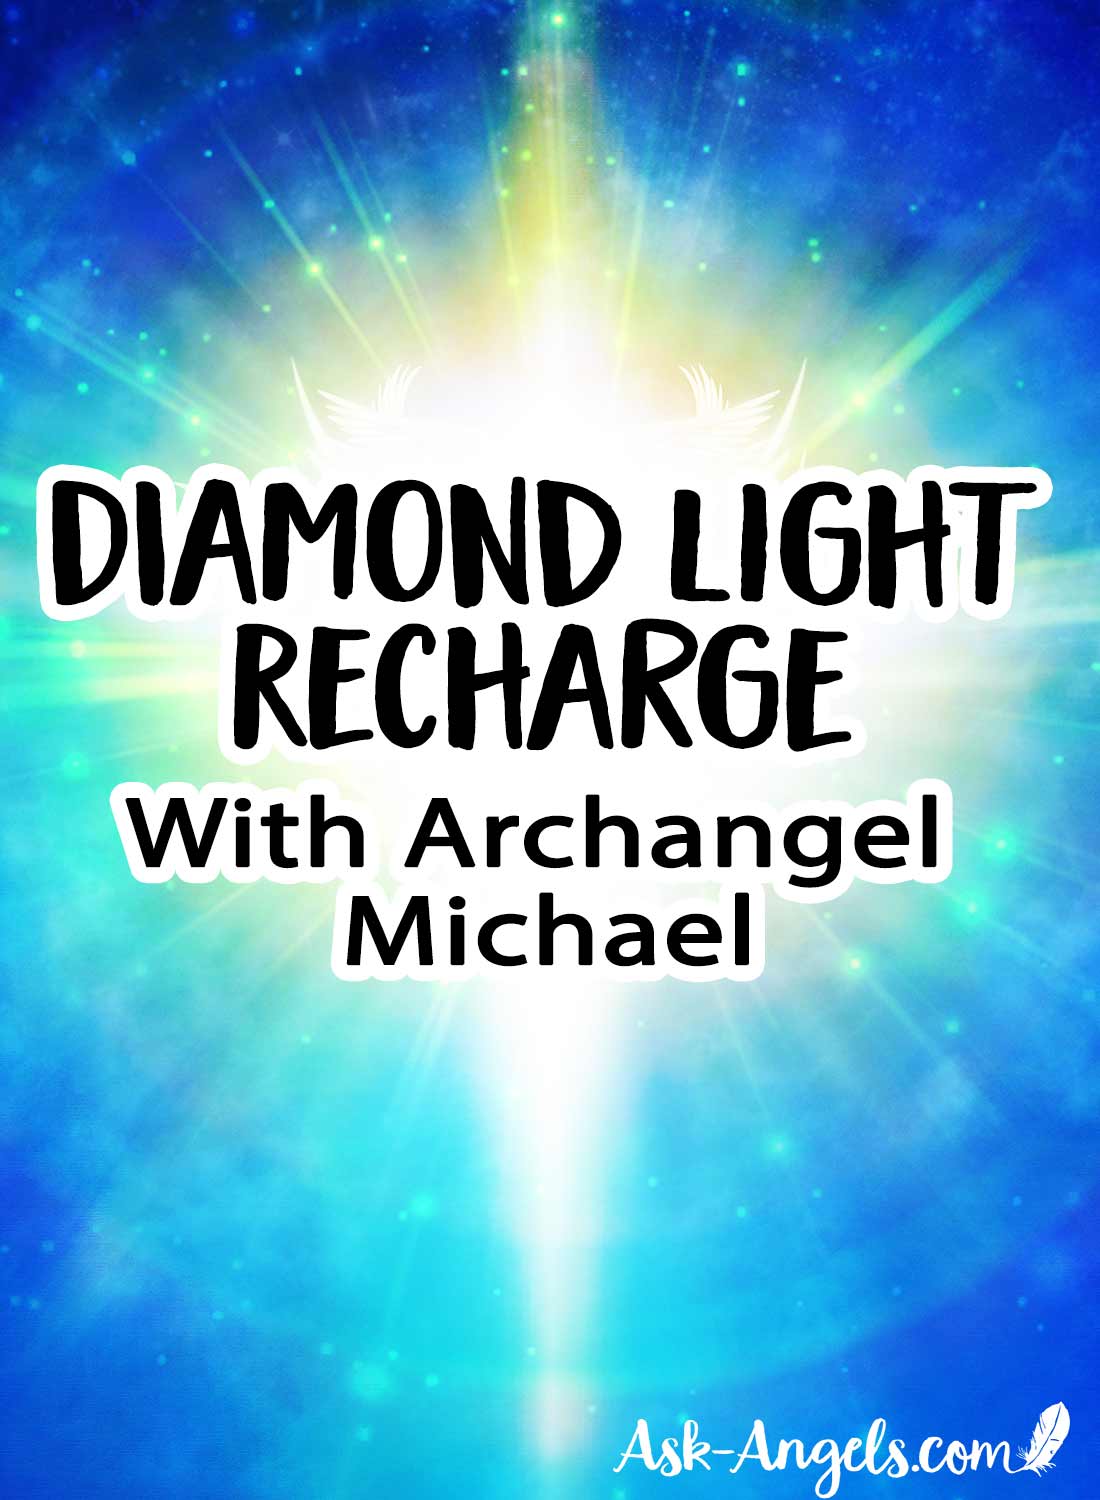 Diamond Light Recharge with Archangel Michael